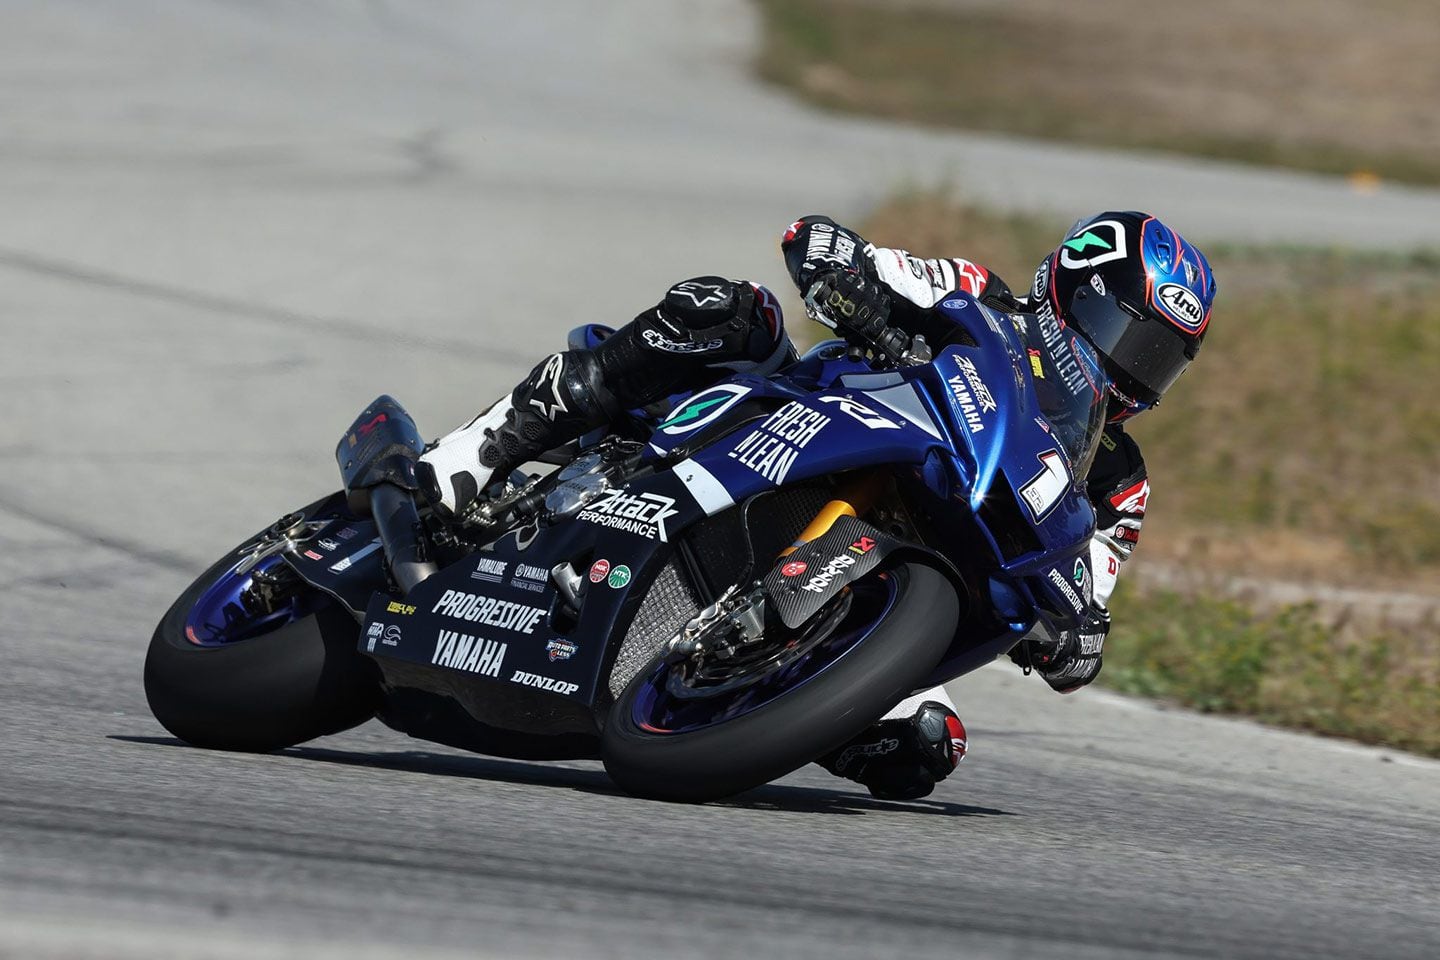 MotoAmerica’s Superbike class will kick off its seasons at Road Atlanta in April.